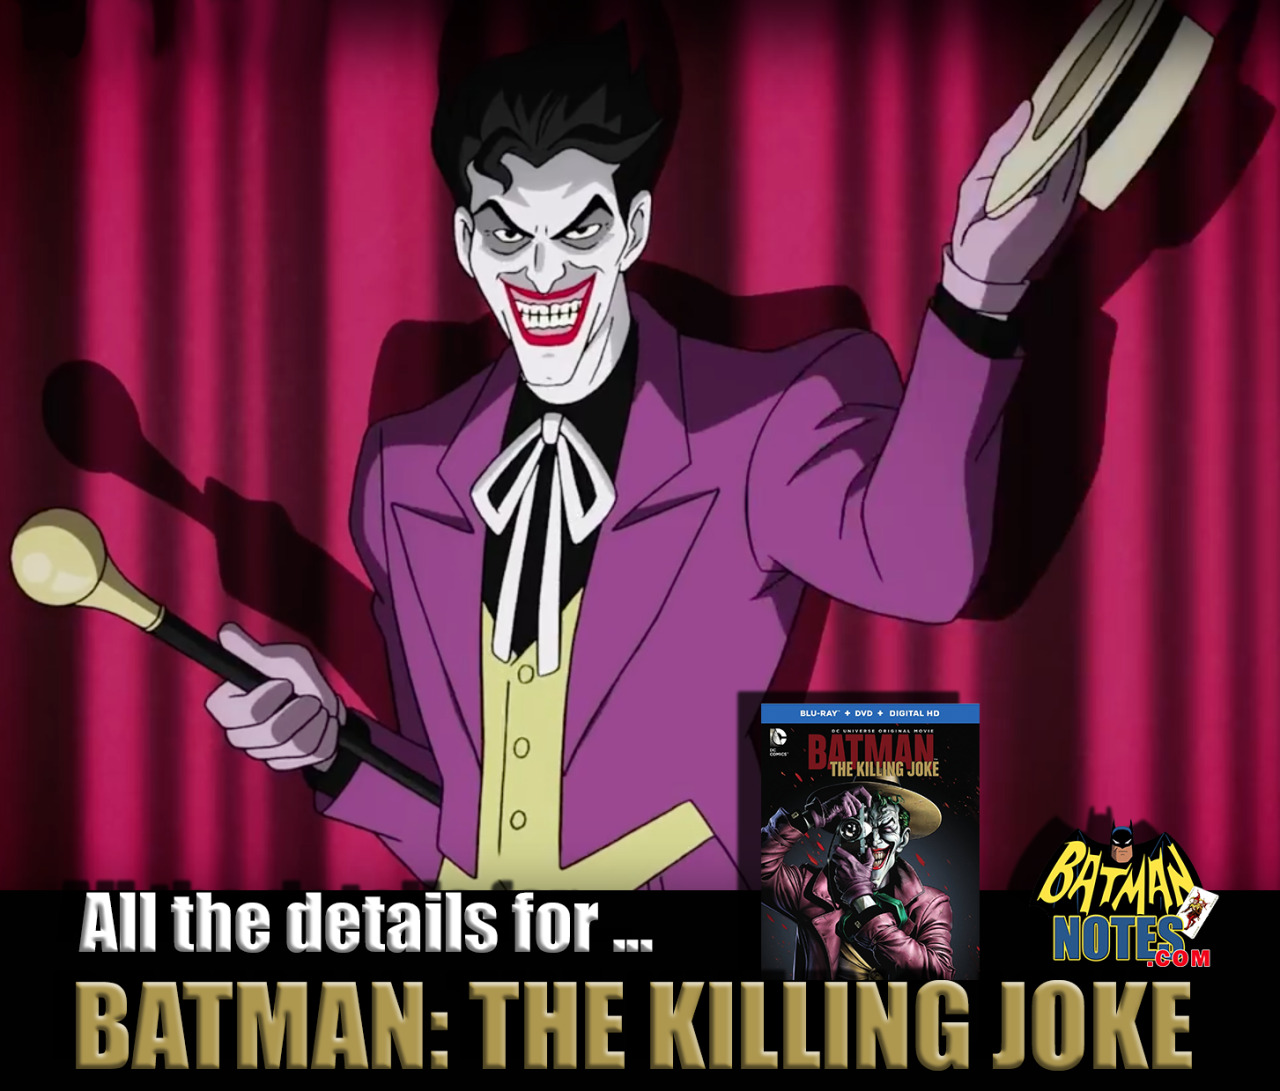 BATMAN NOTES — Batman: The Killing Joke – Enhanced Content An...